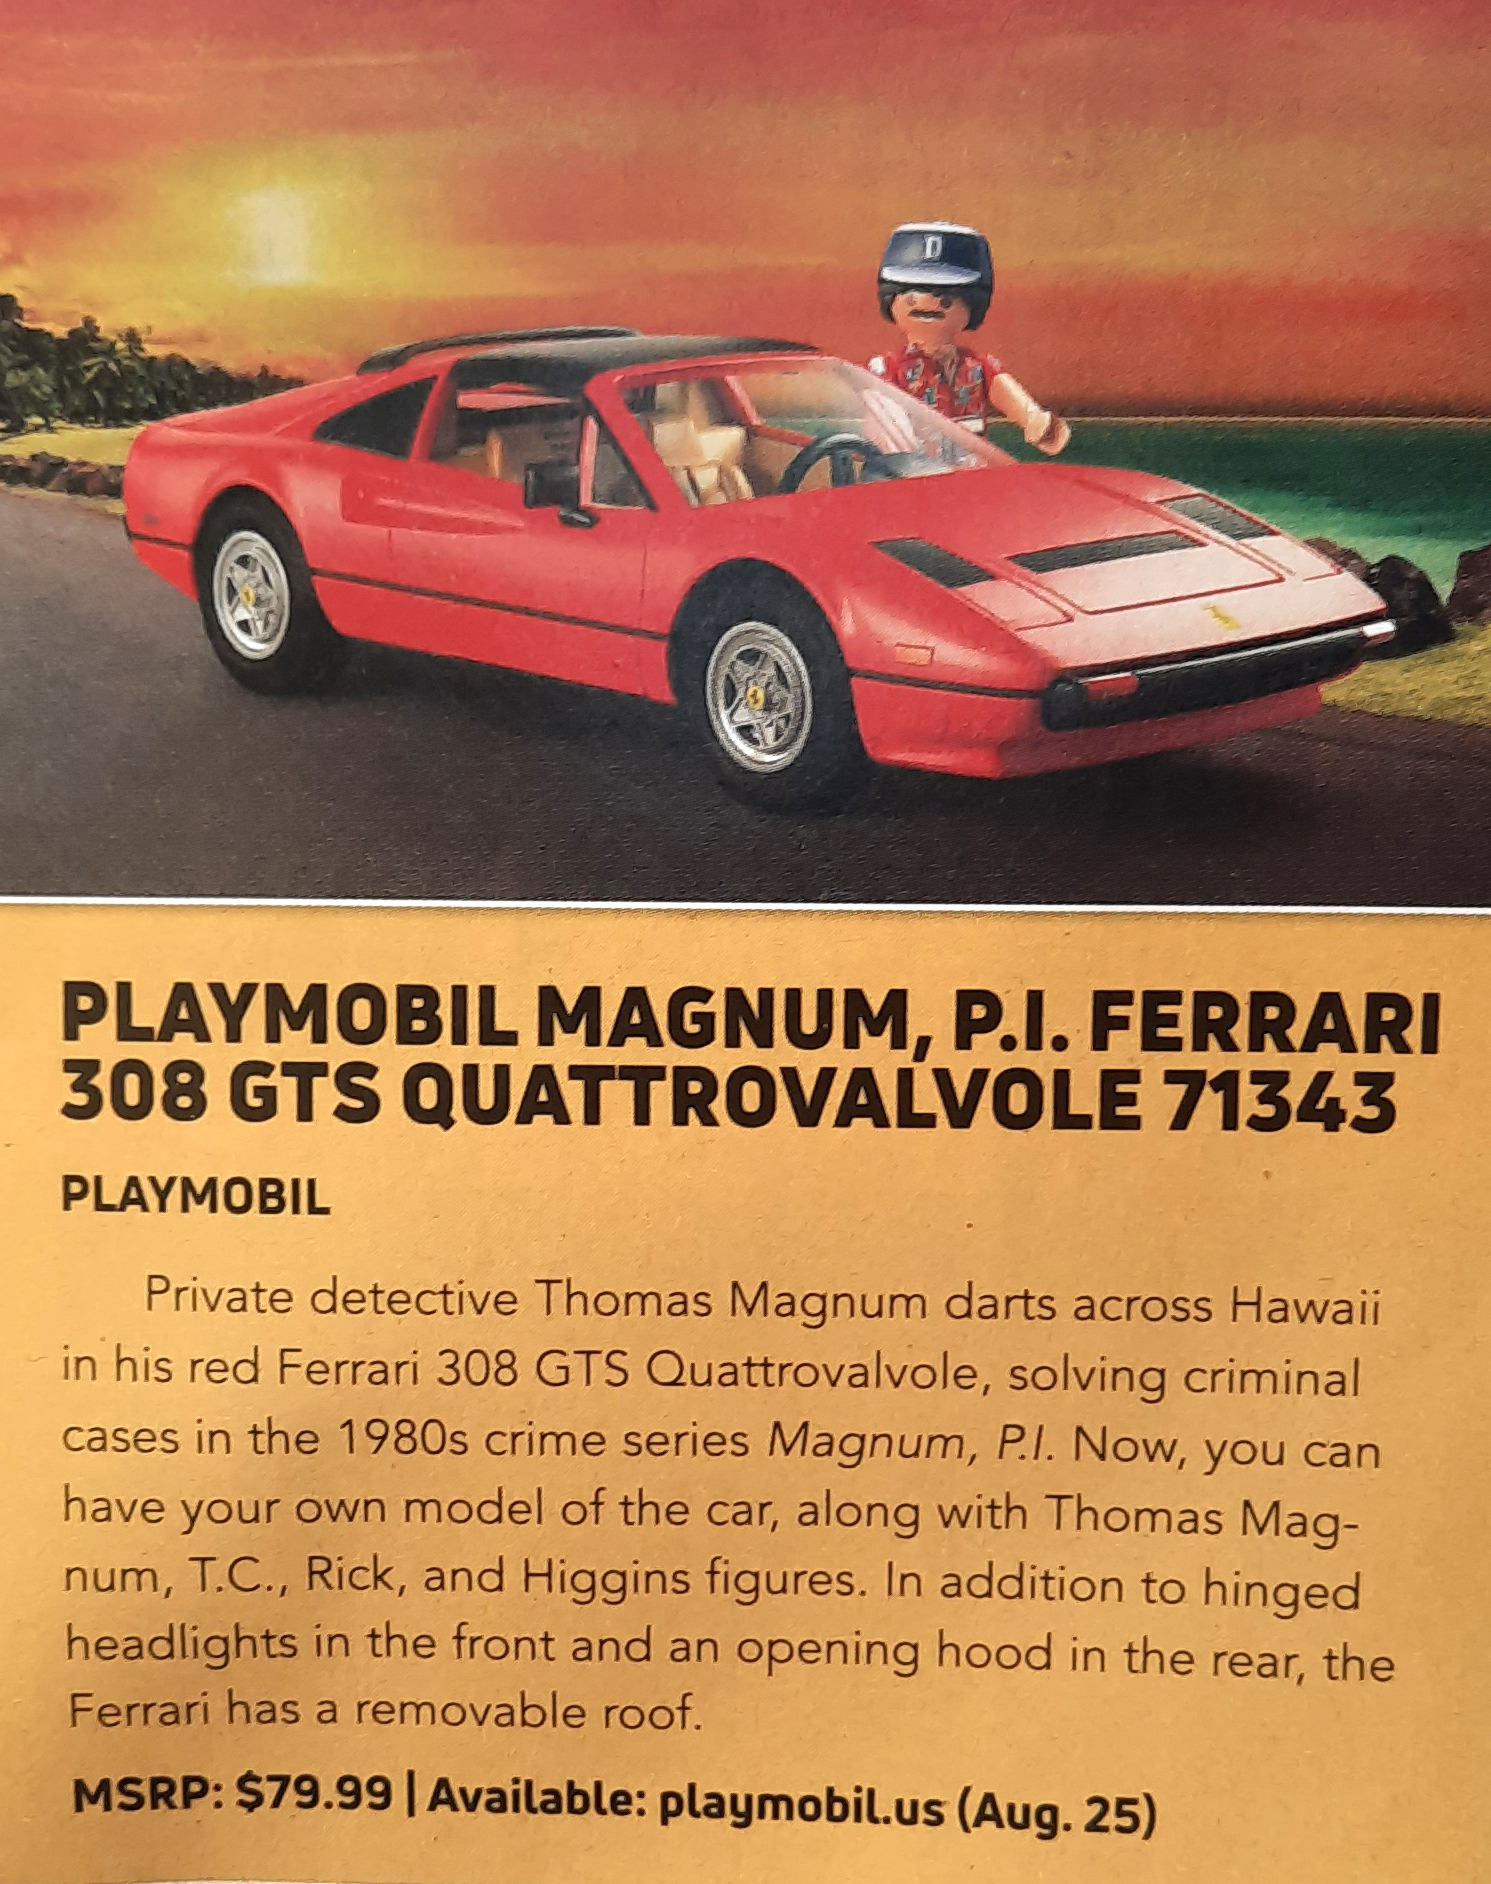 PLAYMOBIL Playmobil Movie Cars Magnum, P.i. Ferrari 308 Gts Quattrovalvole  - 71343 - Playmobil Movie Cars 